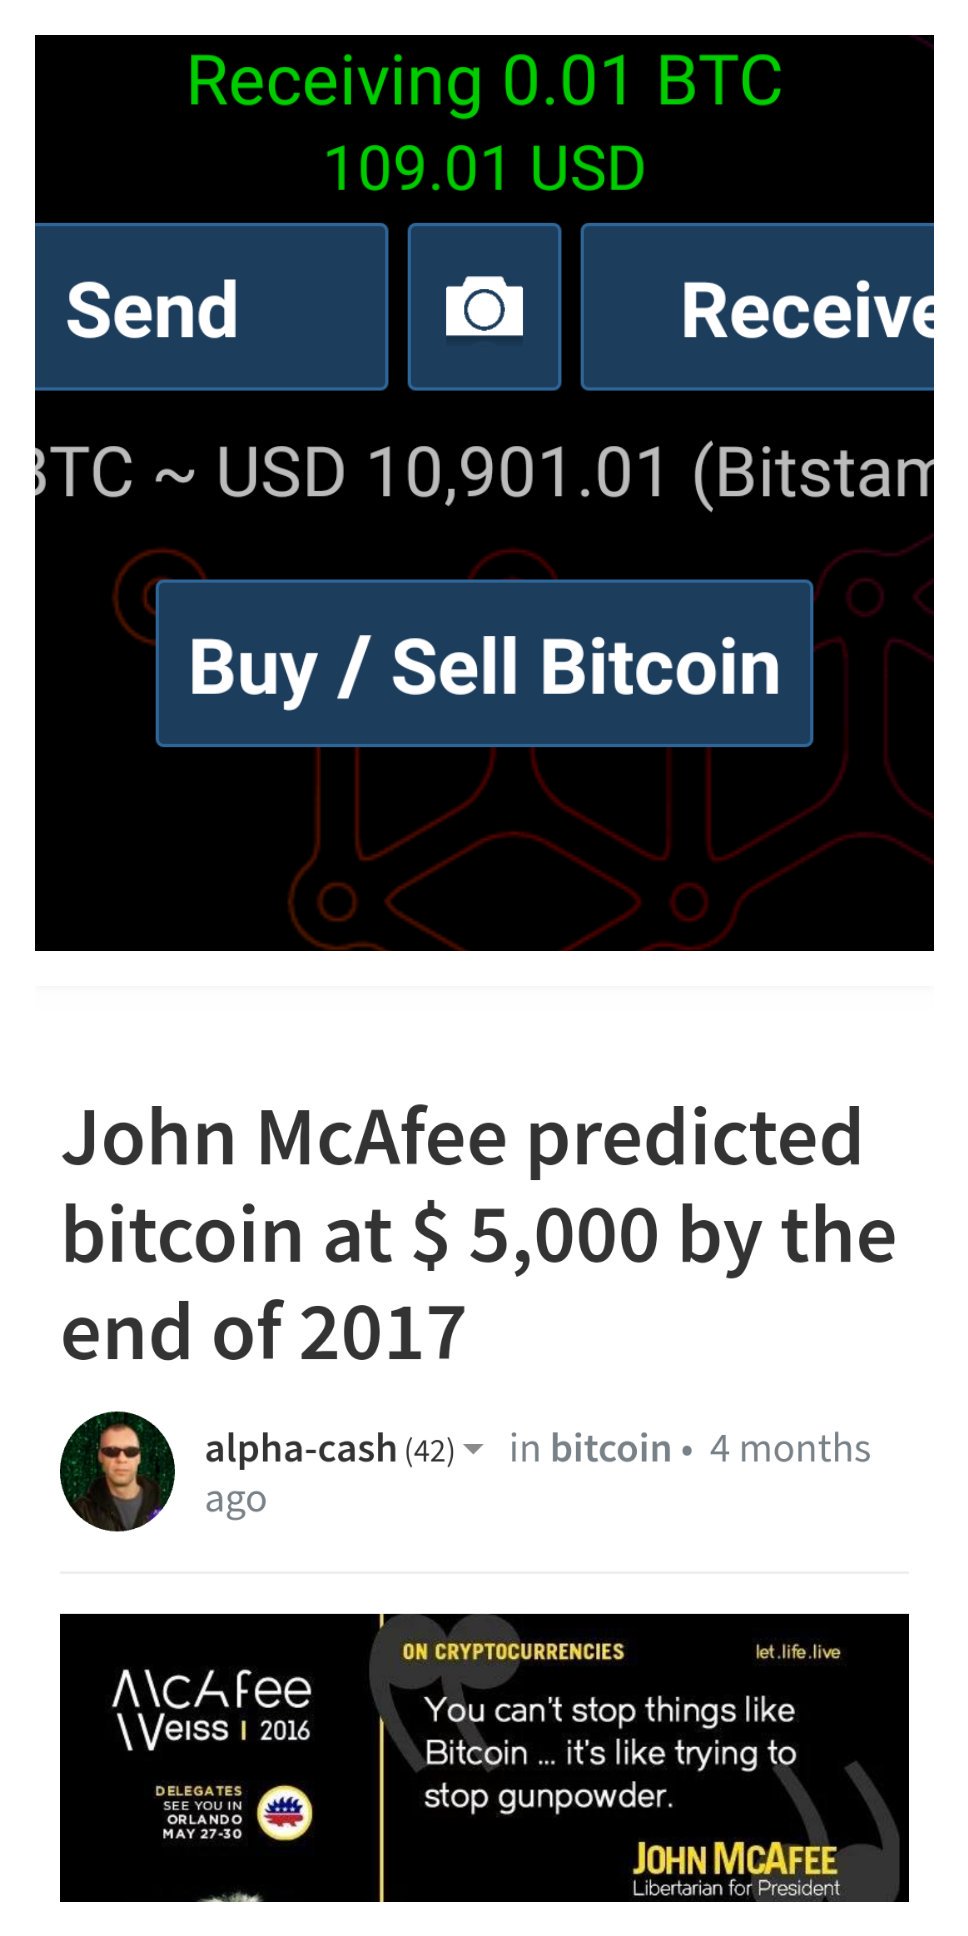 John McAfee pari que le prix Bitcoin va atteindre 1 million de dollars d'ici 2020